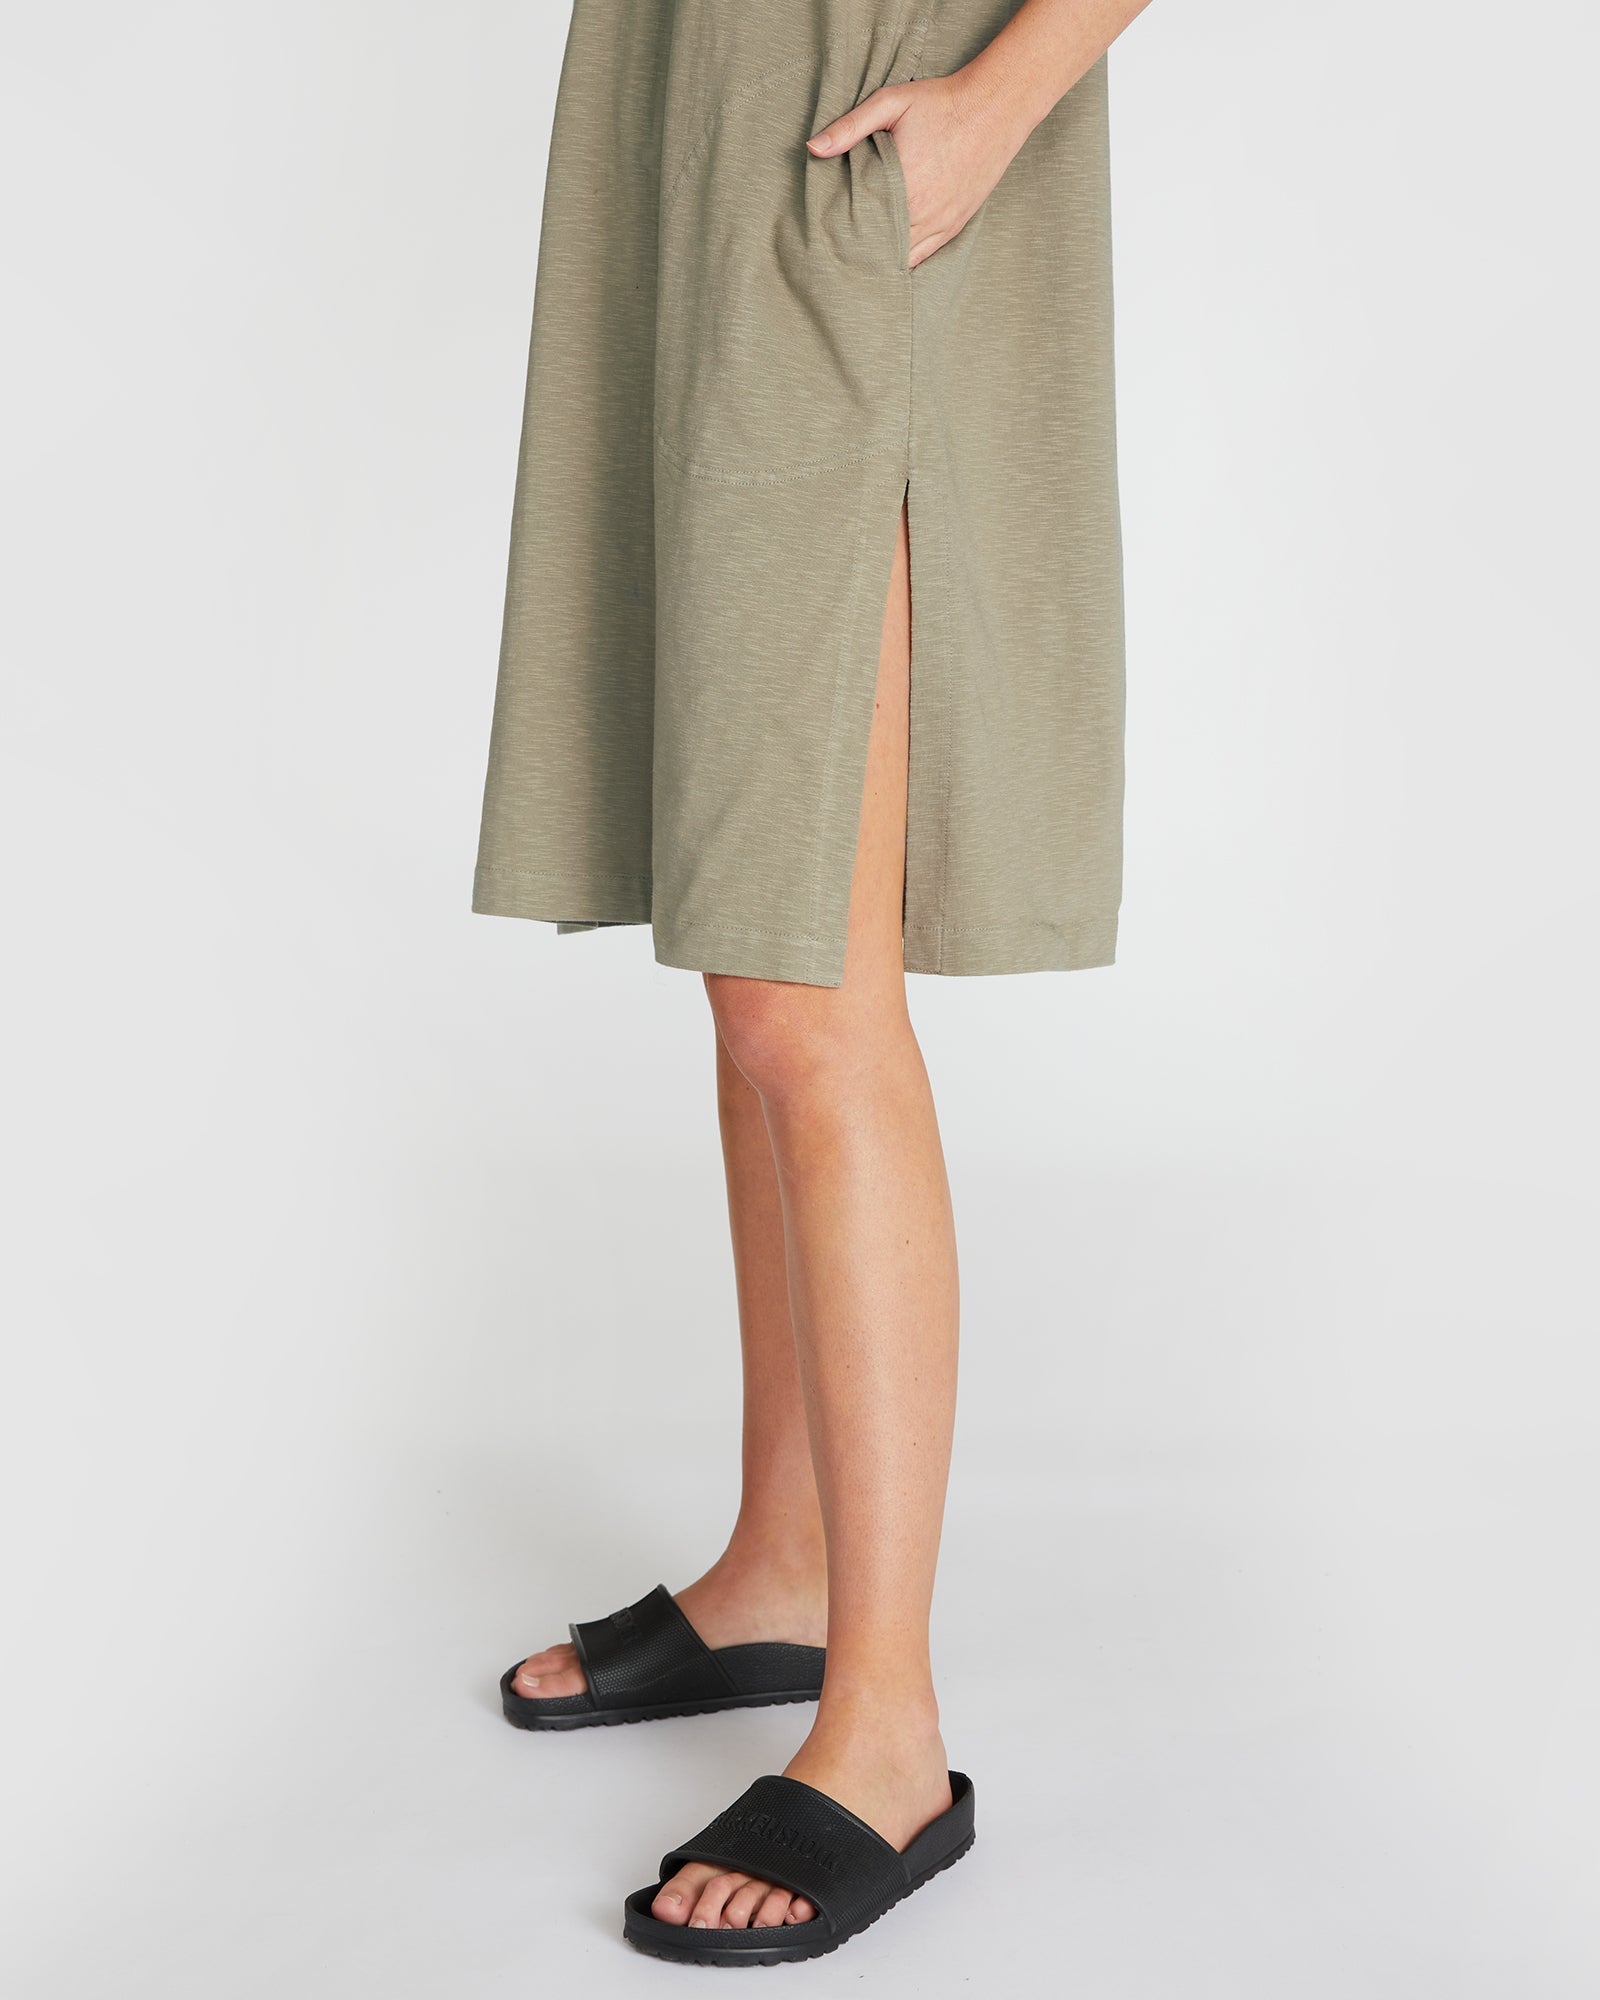 The Slub Tee Dress | Safari-Cloth & Co-stride